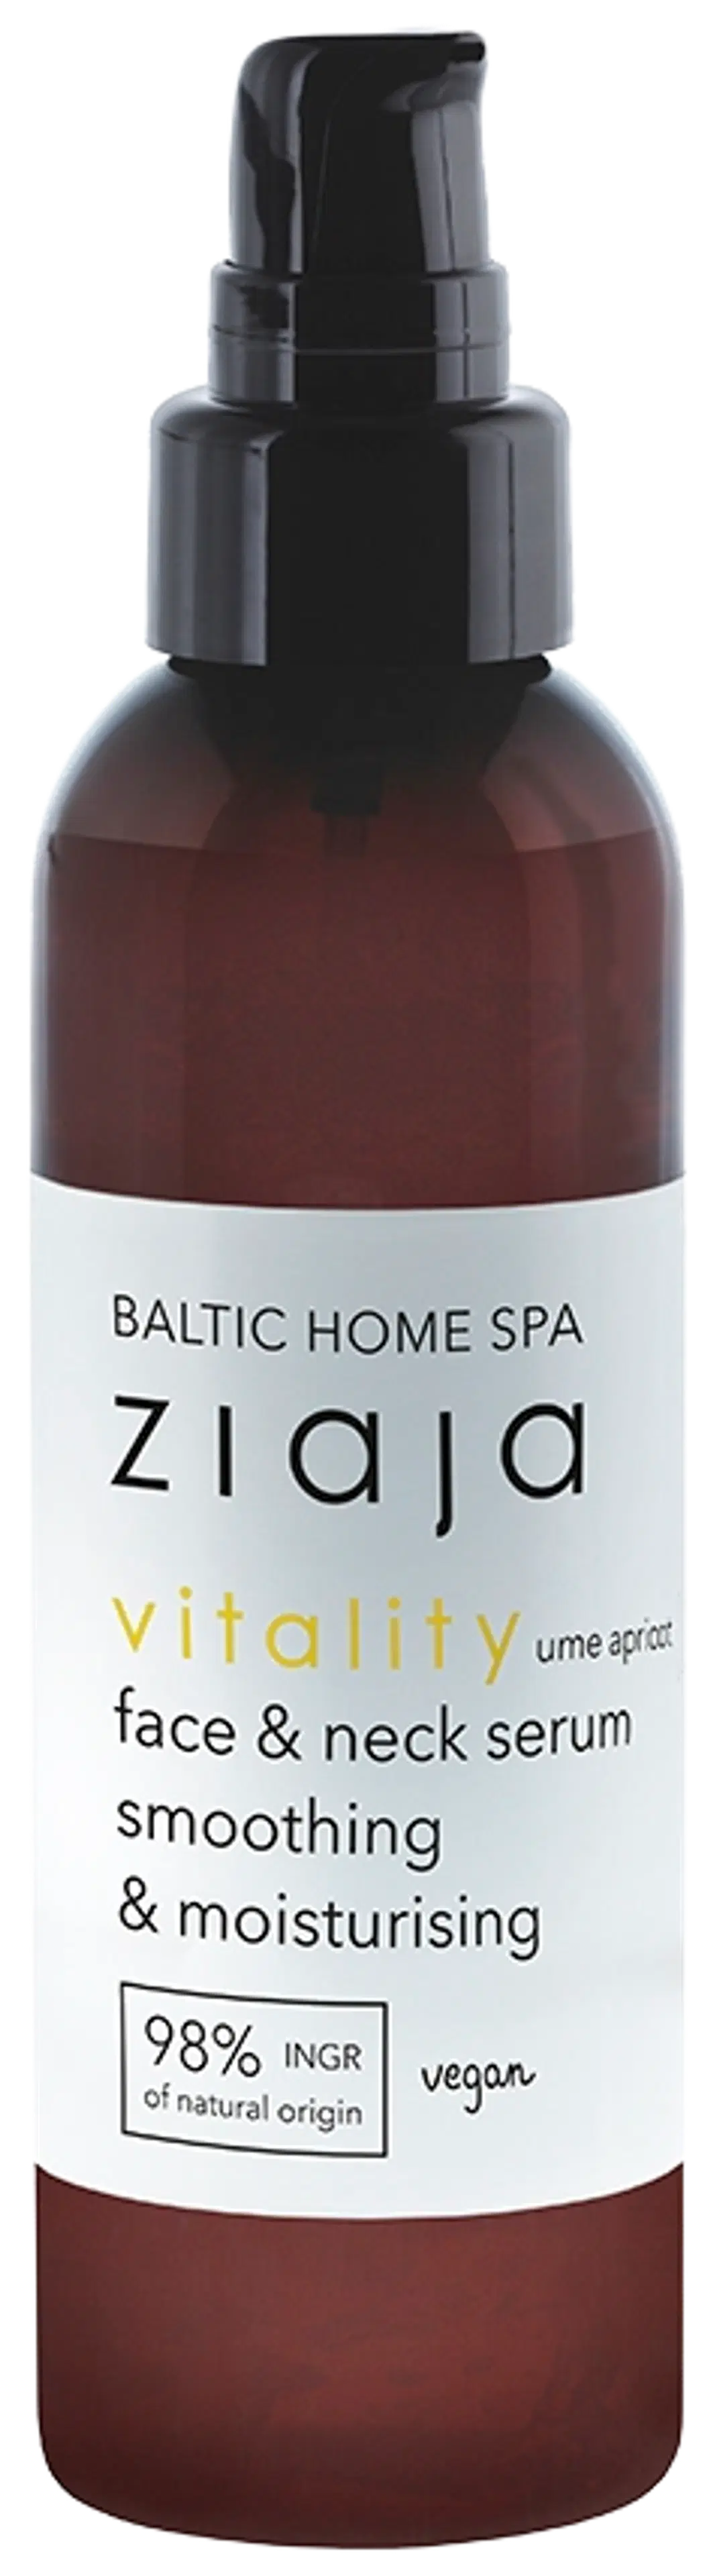 Ziaja Baltic Home Spa Vitality kasvoseerumi 90 ml